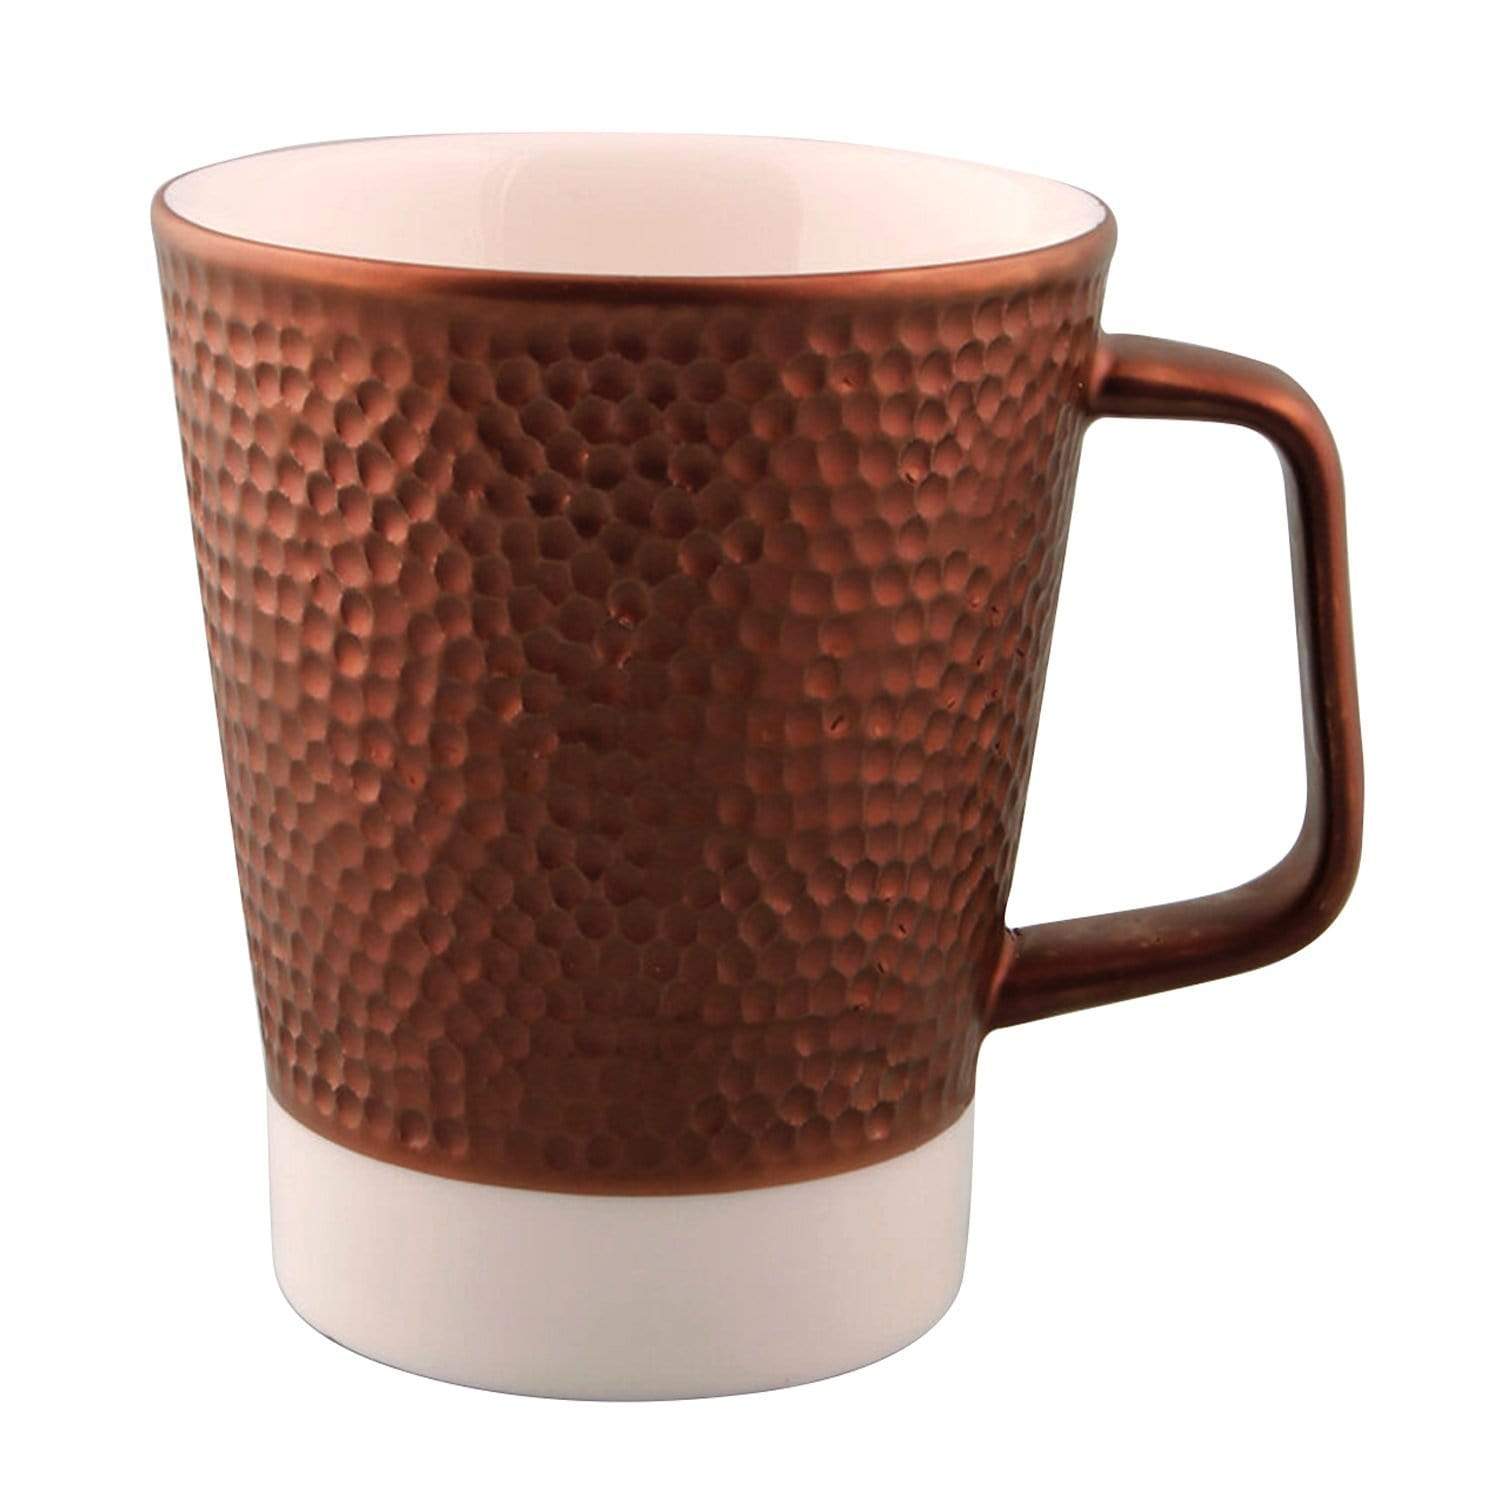 Porland Porselen Legacy Copper Coffee Mug - 335 ml - 04ALM004355 - Jashanmal Home